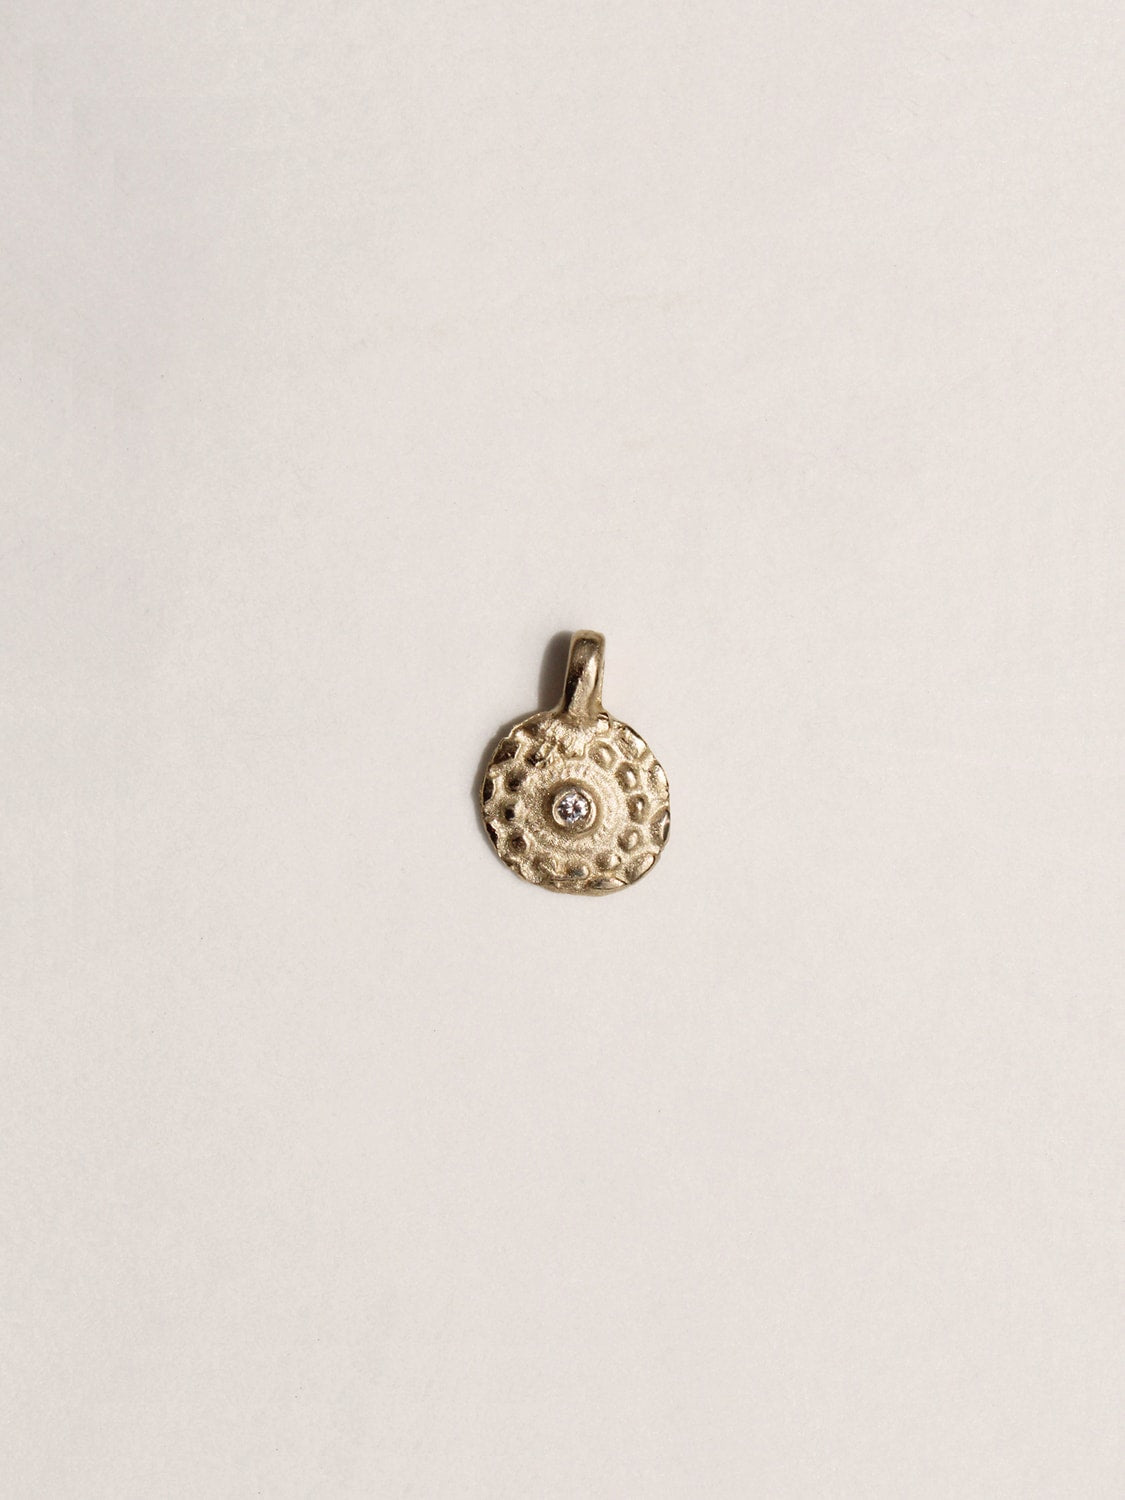 Rice Pearl Beads Necklace - 14K + Diamond Pendant